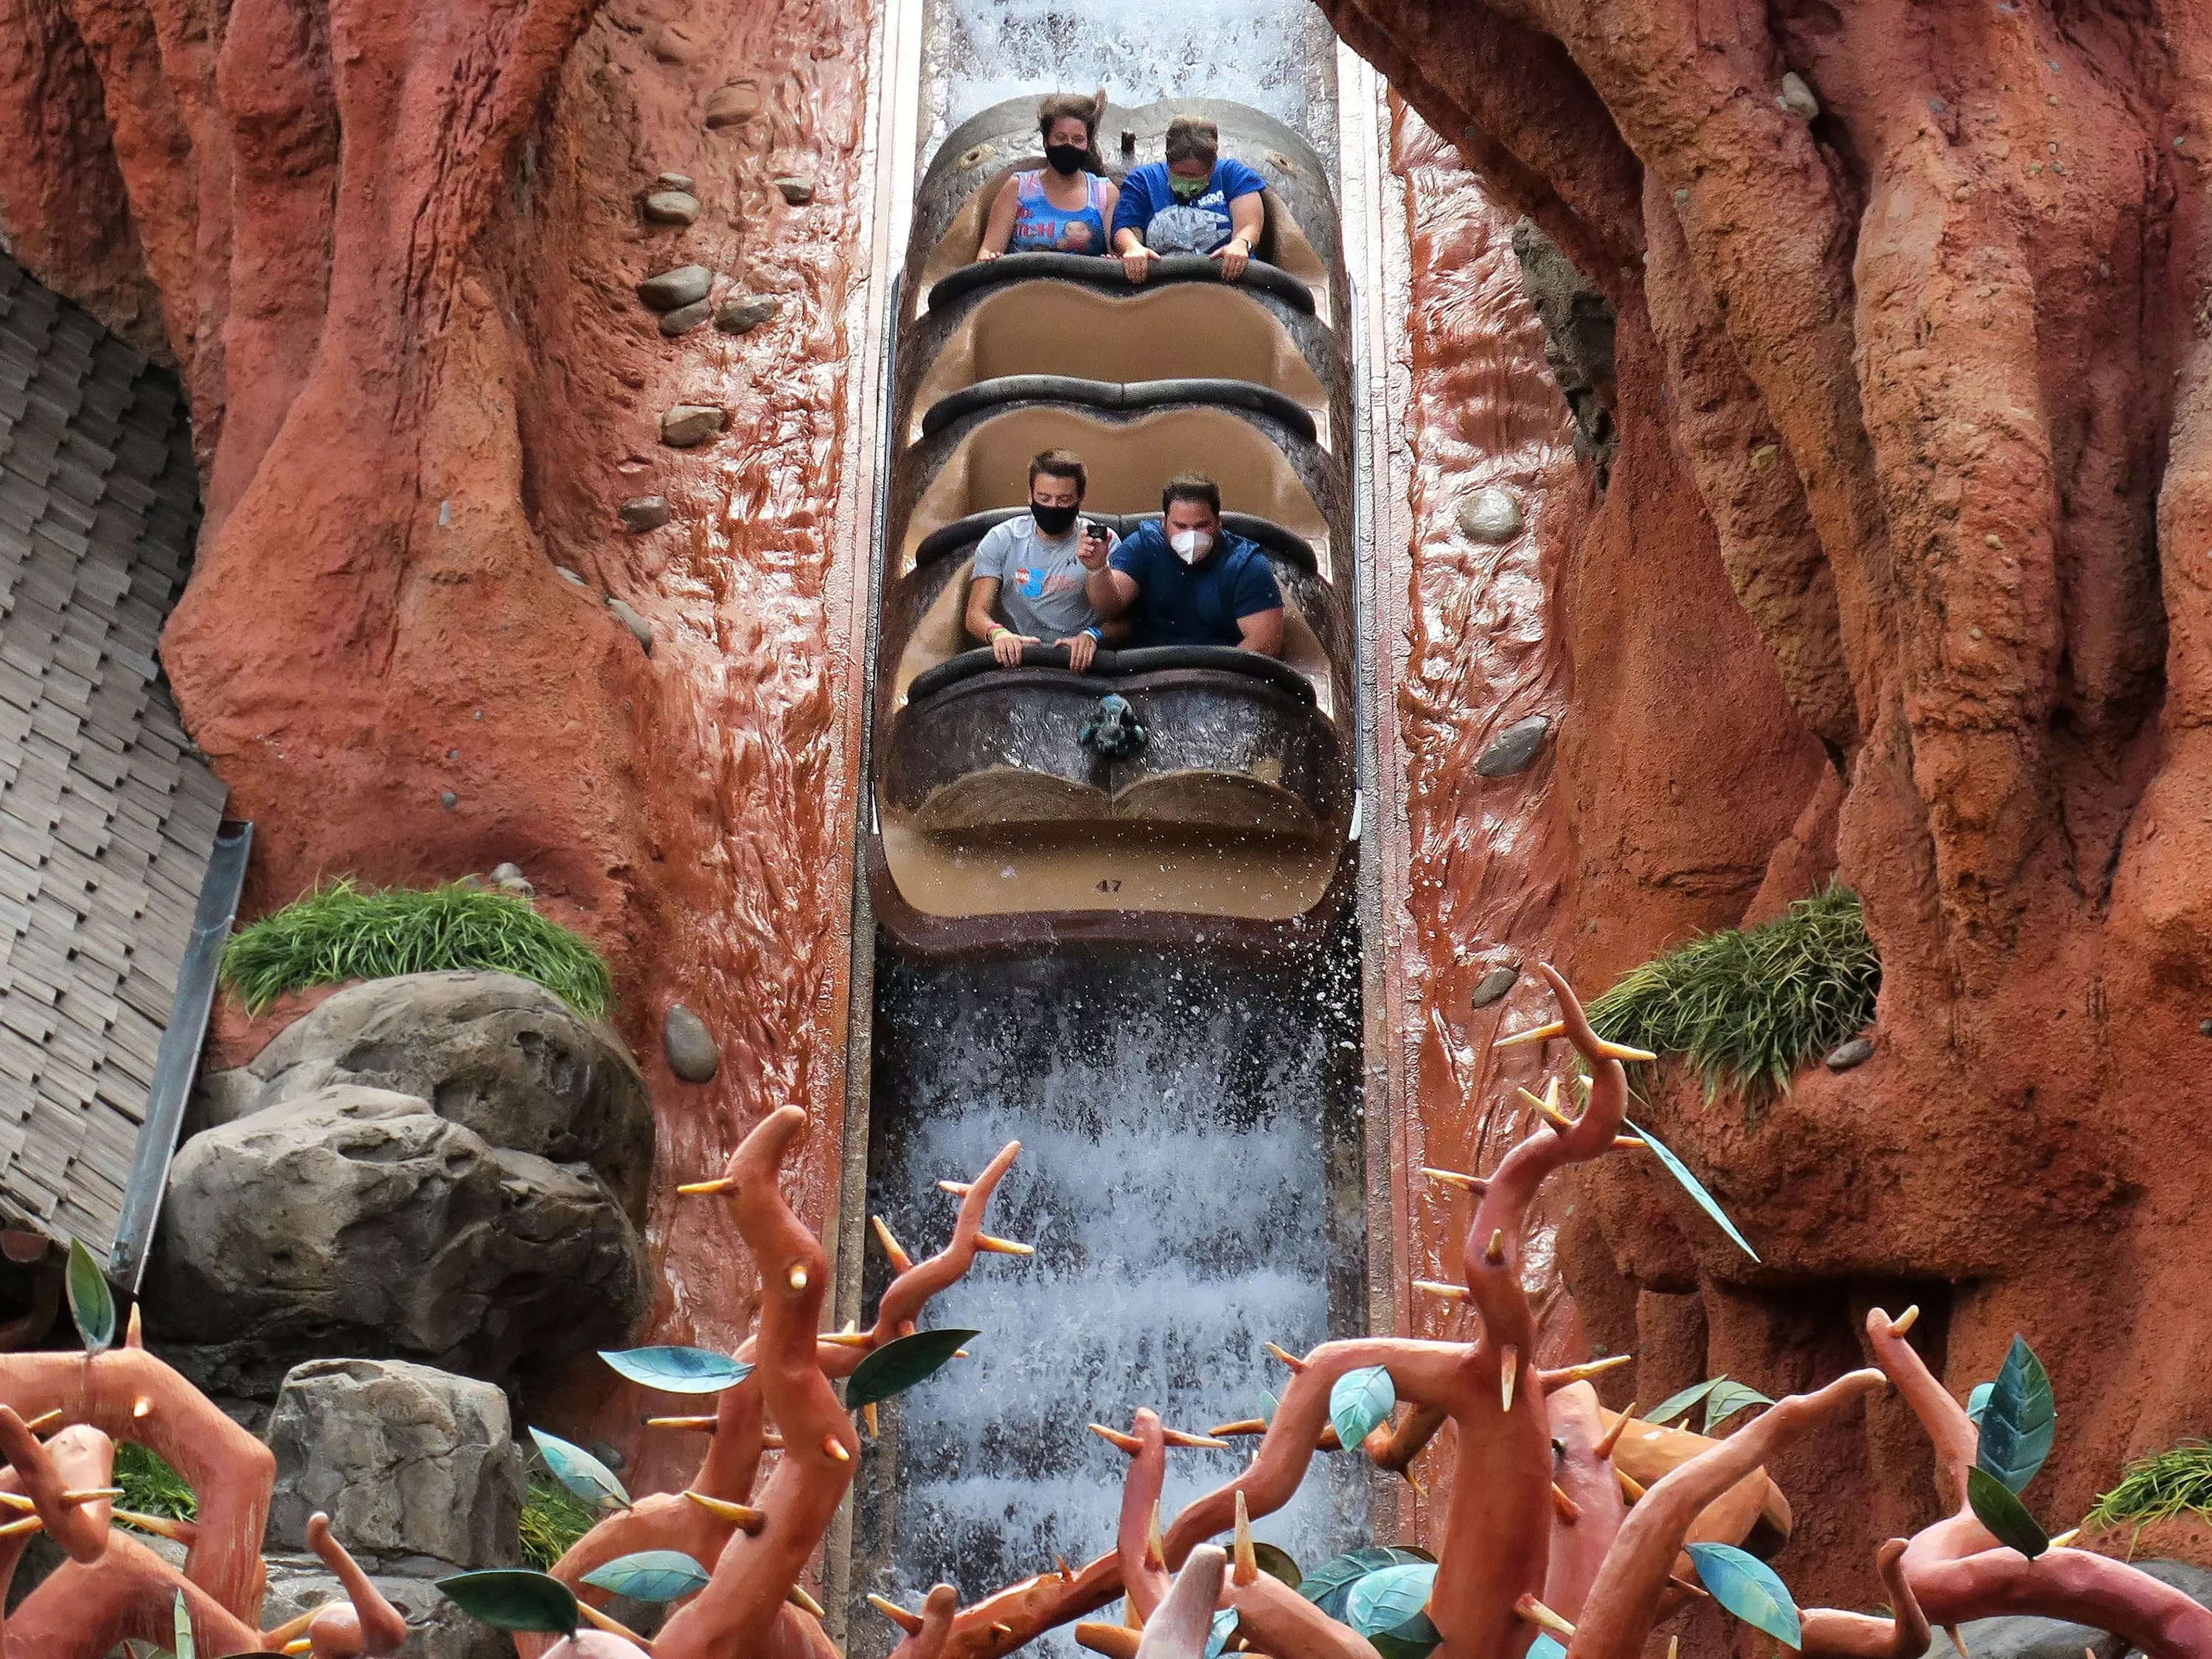 New photos show how Disney World will transform Splash Mountain into a